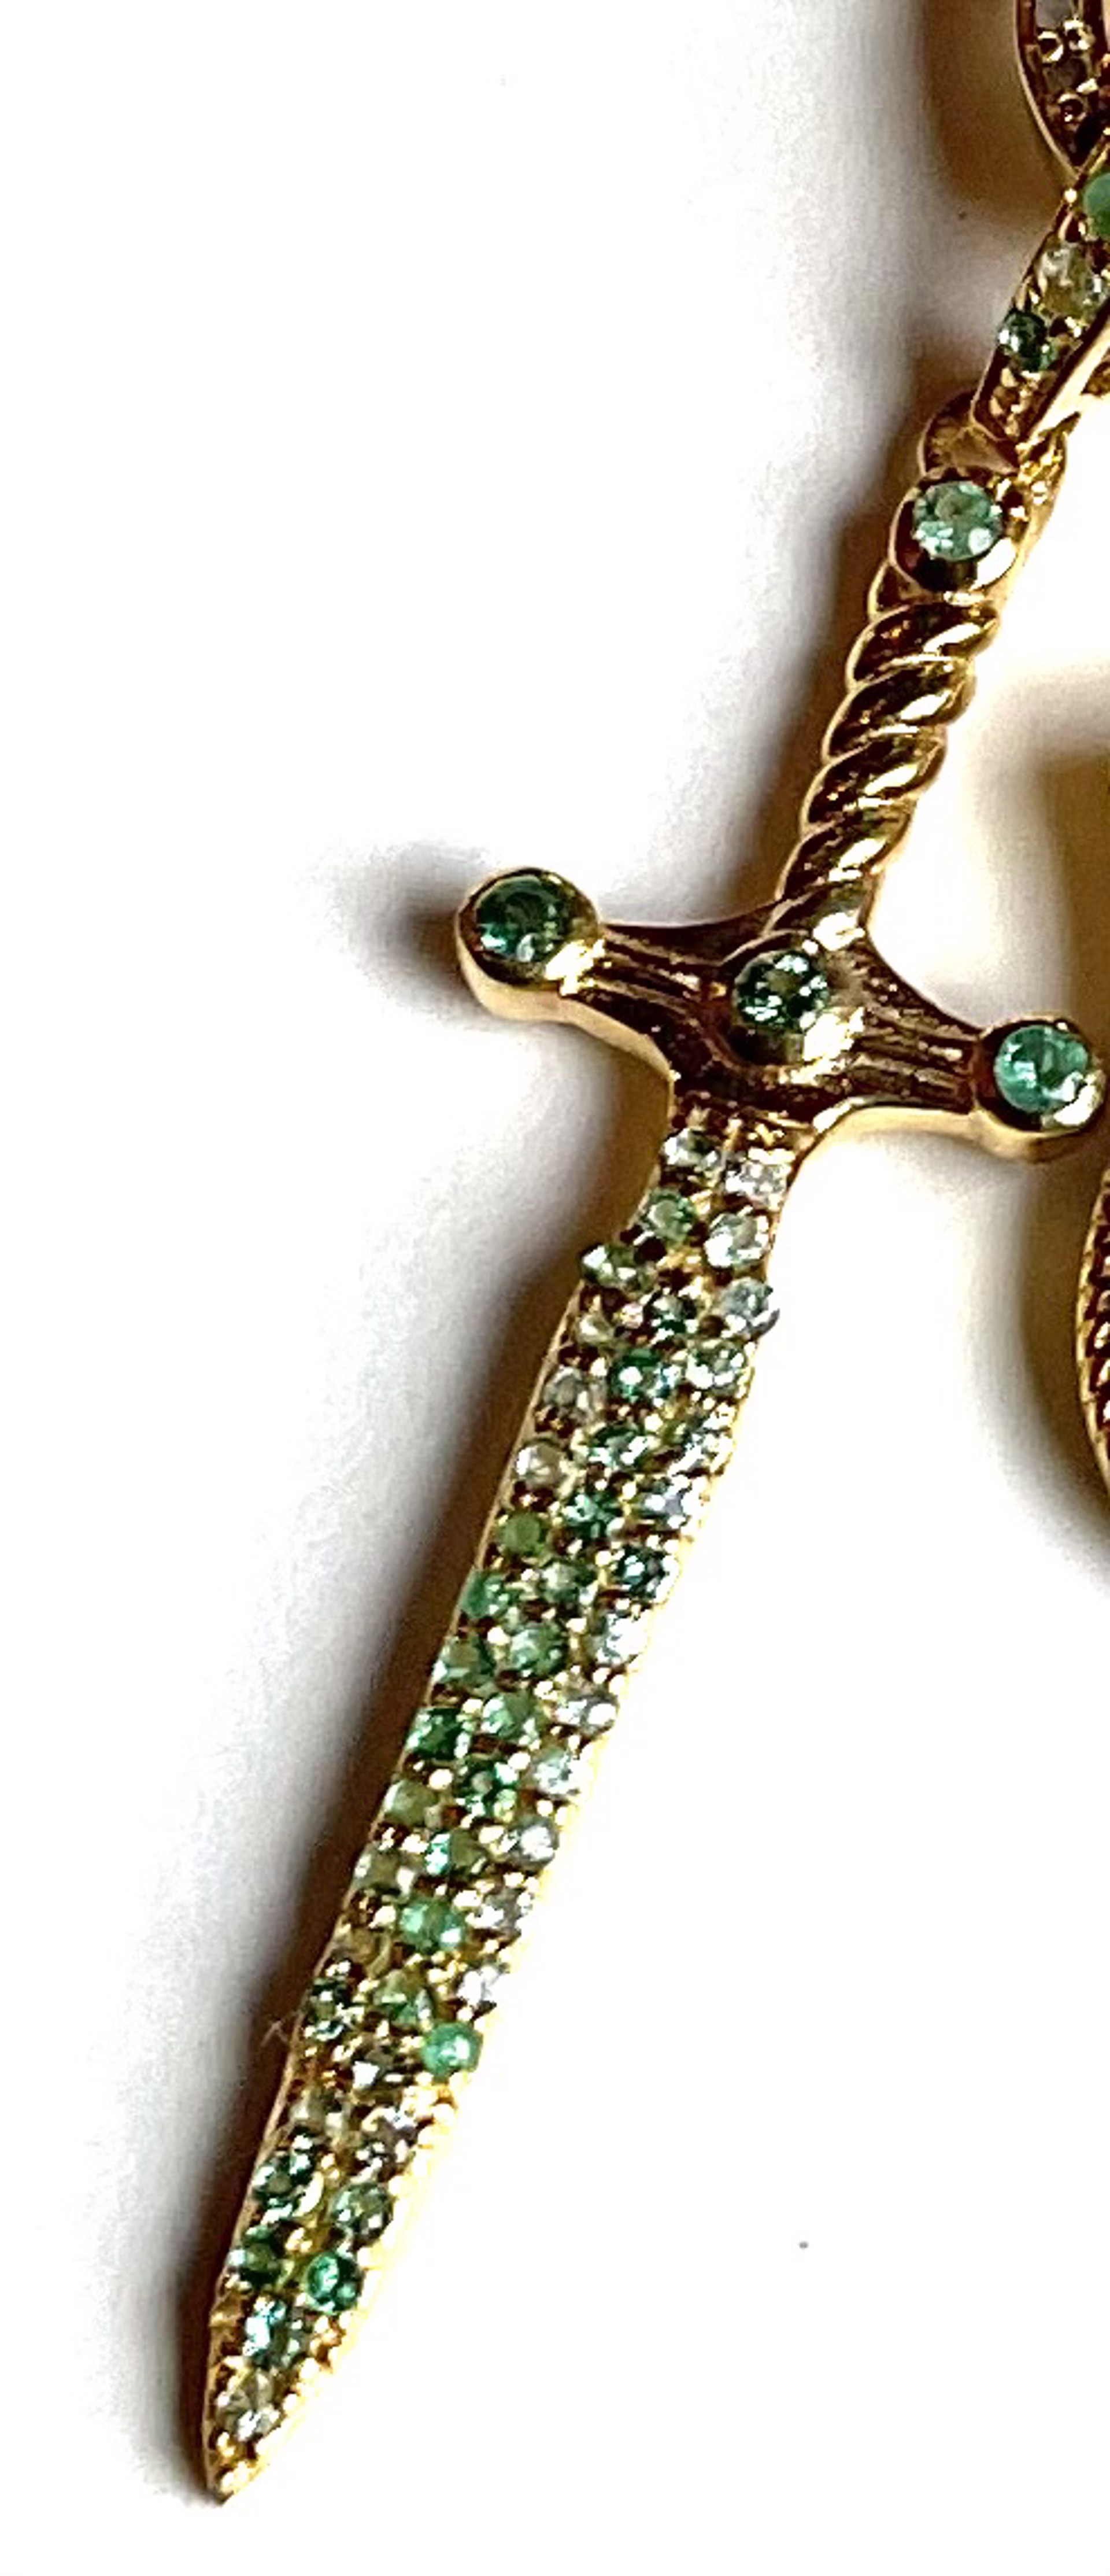 KB-P75 GVML and Emerald Sword Pendant by Karen Birchmier